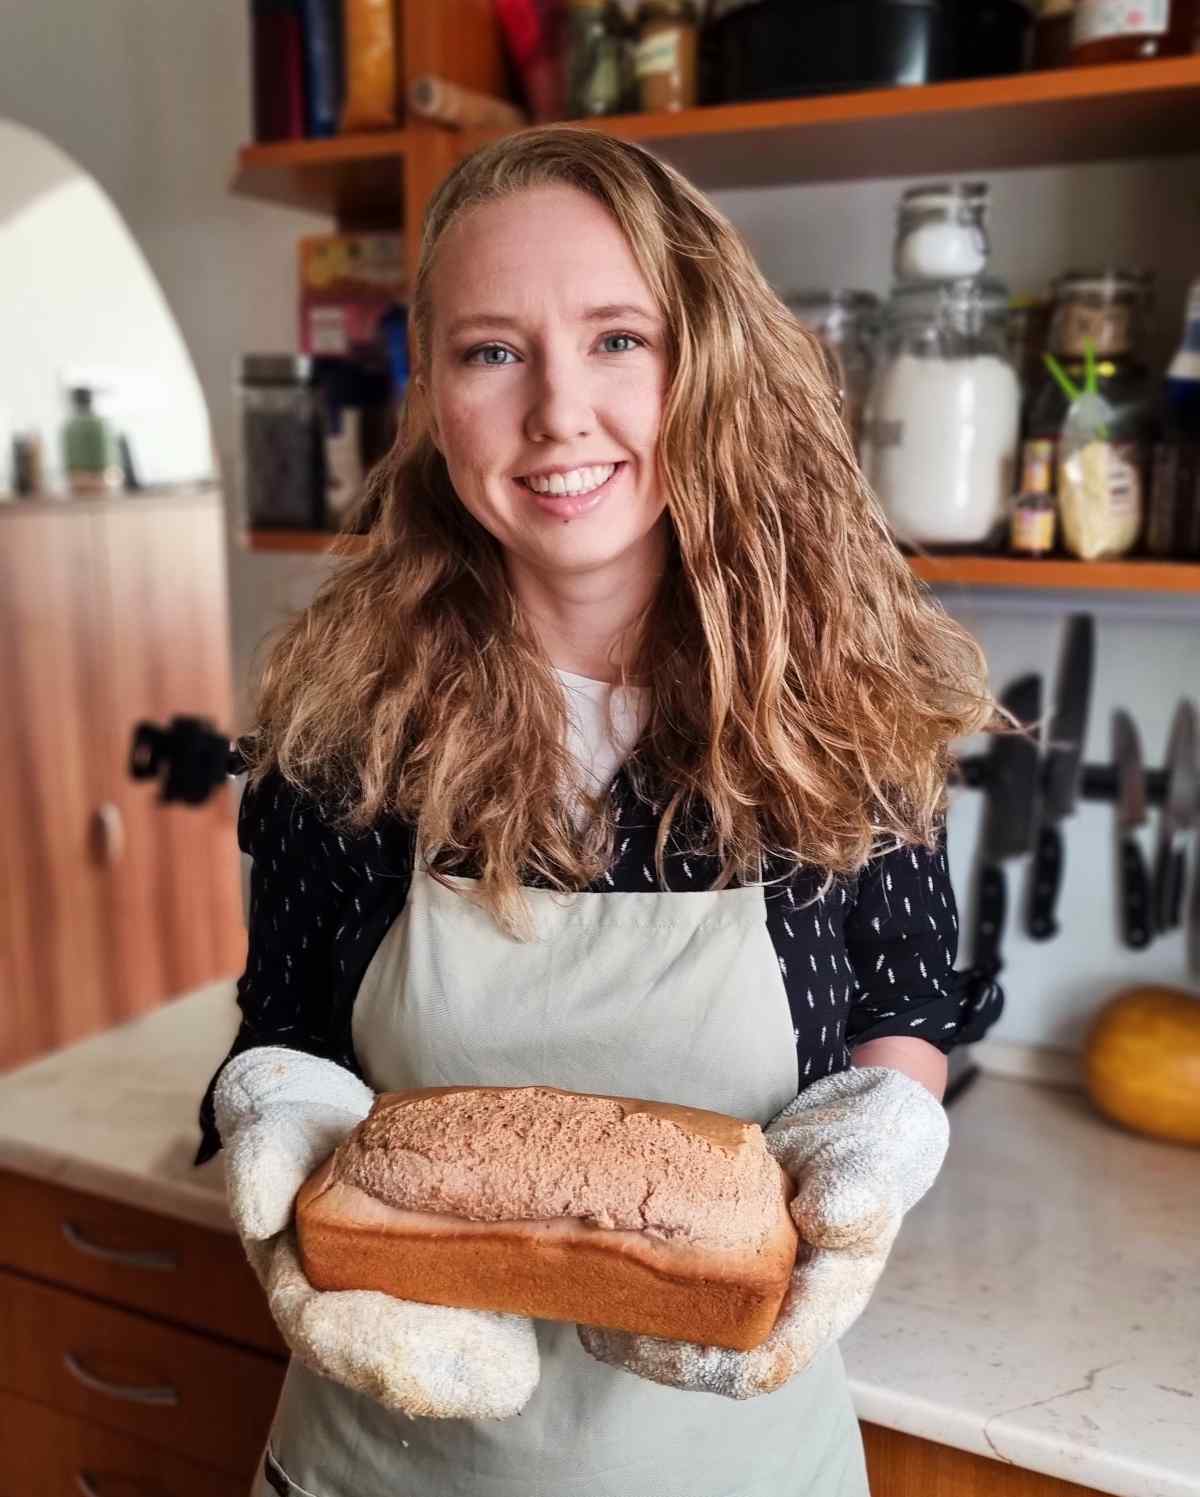 Natasha holding a loaf of bread.